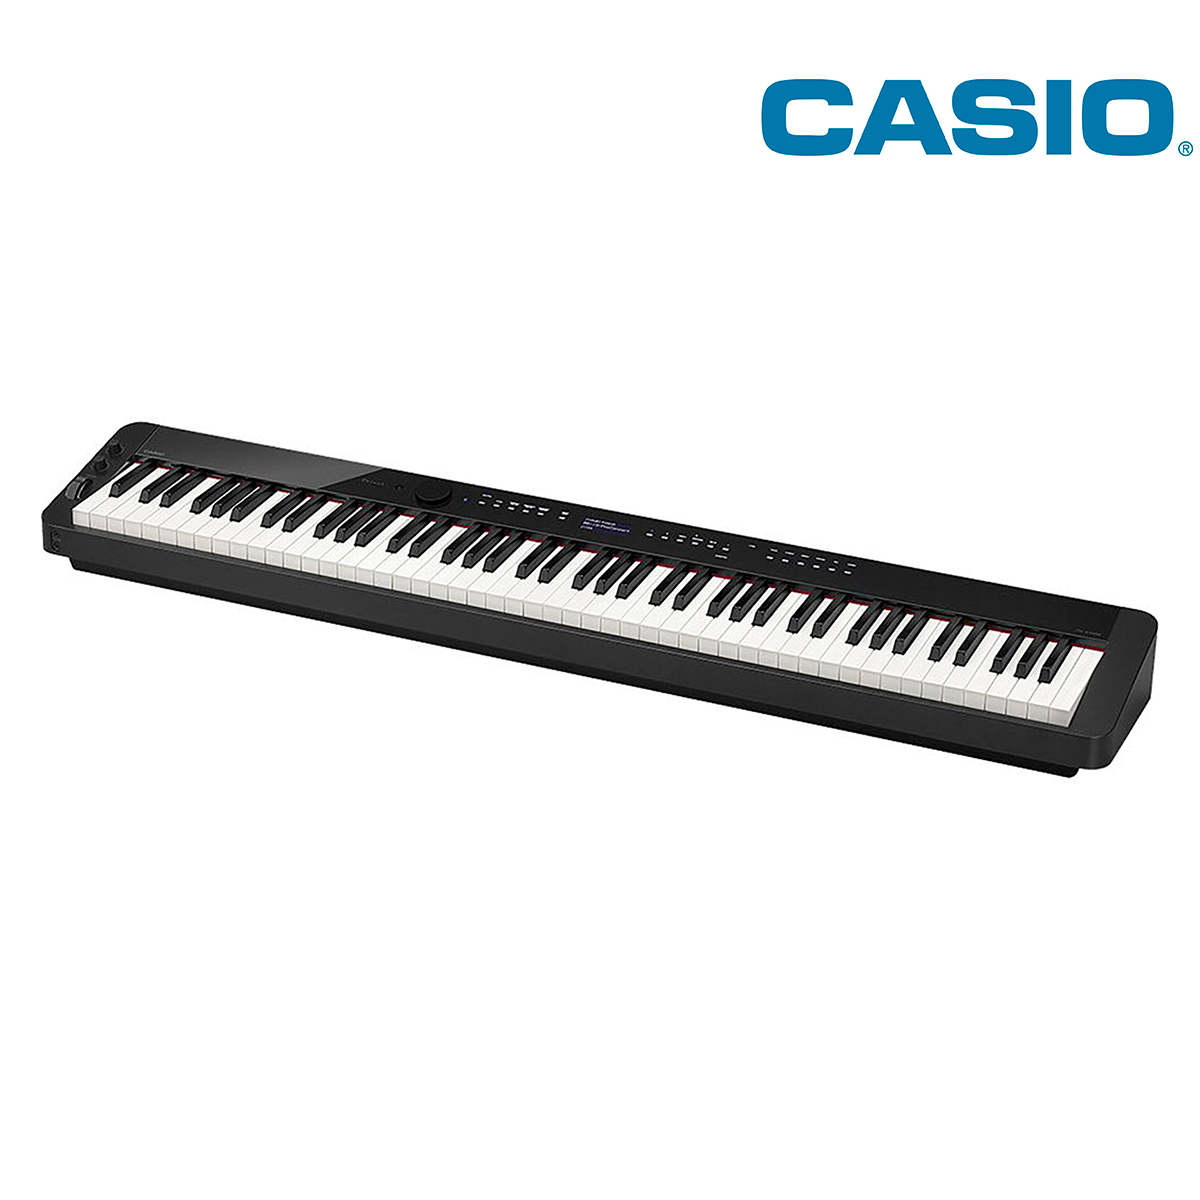 PIANO CASIO DIGITAL PX-S3000BK